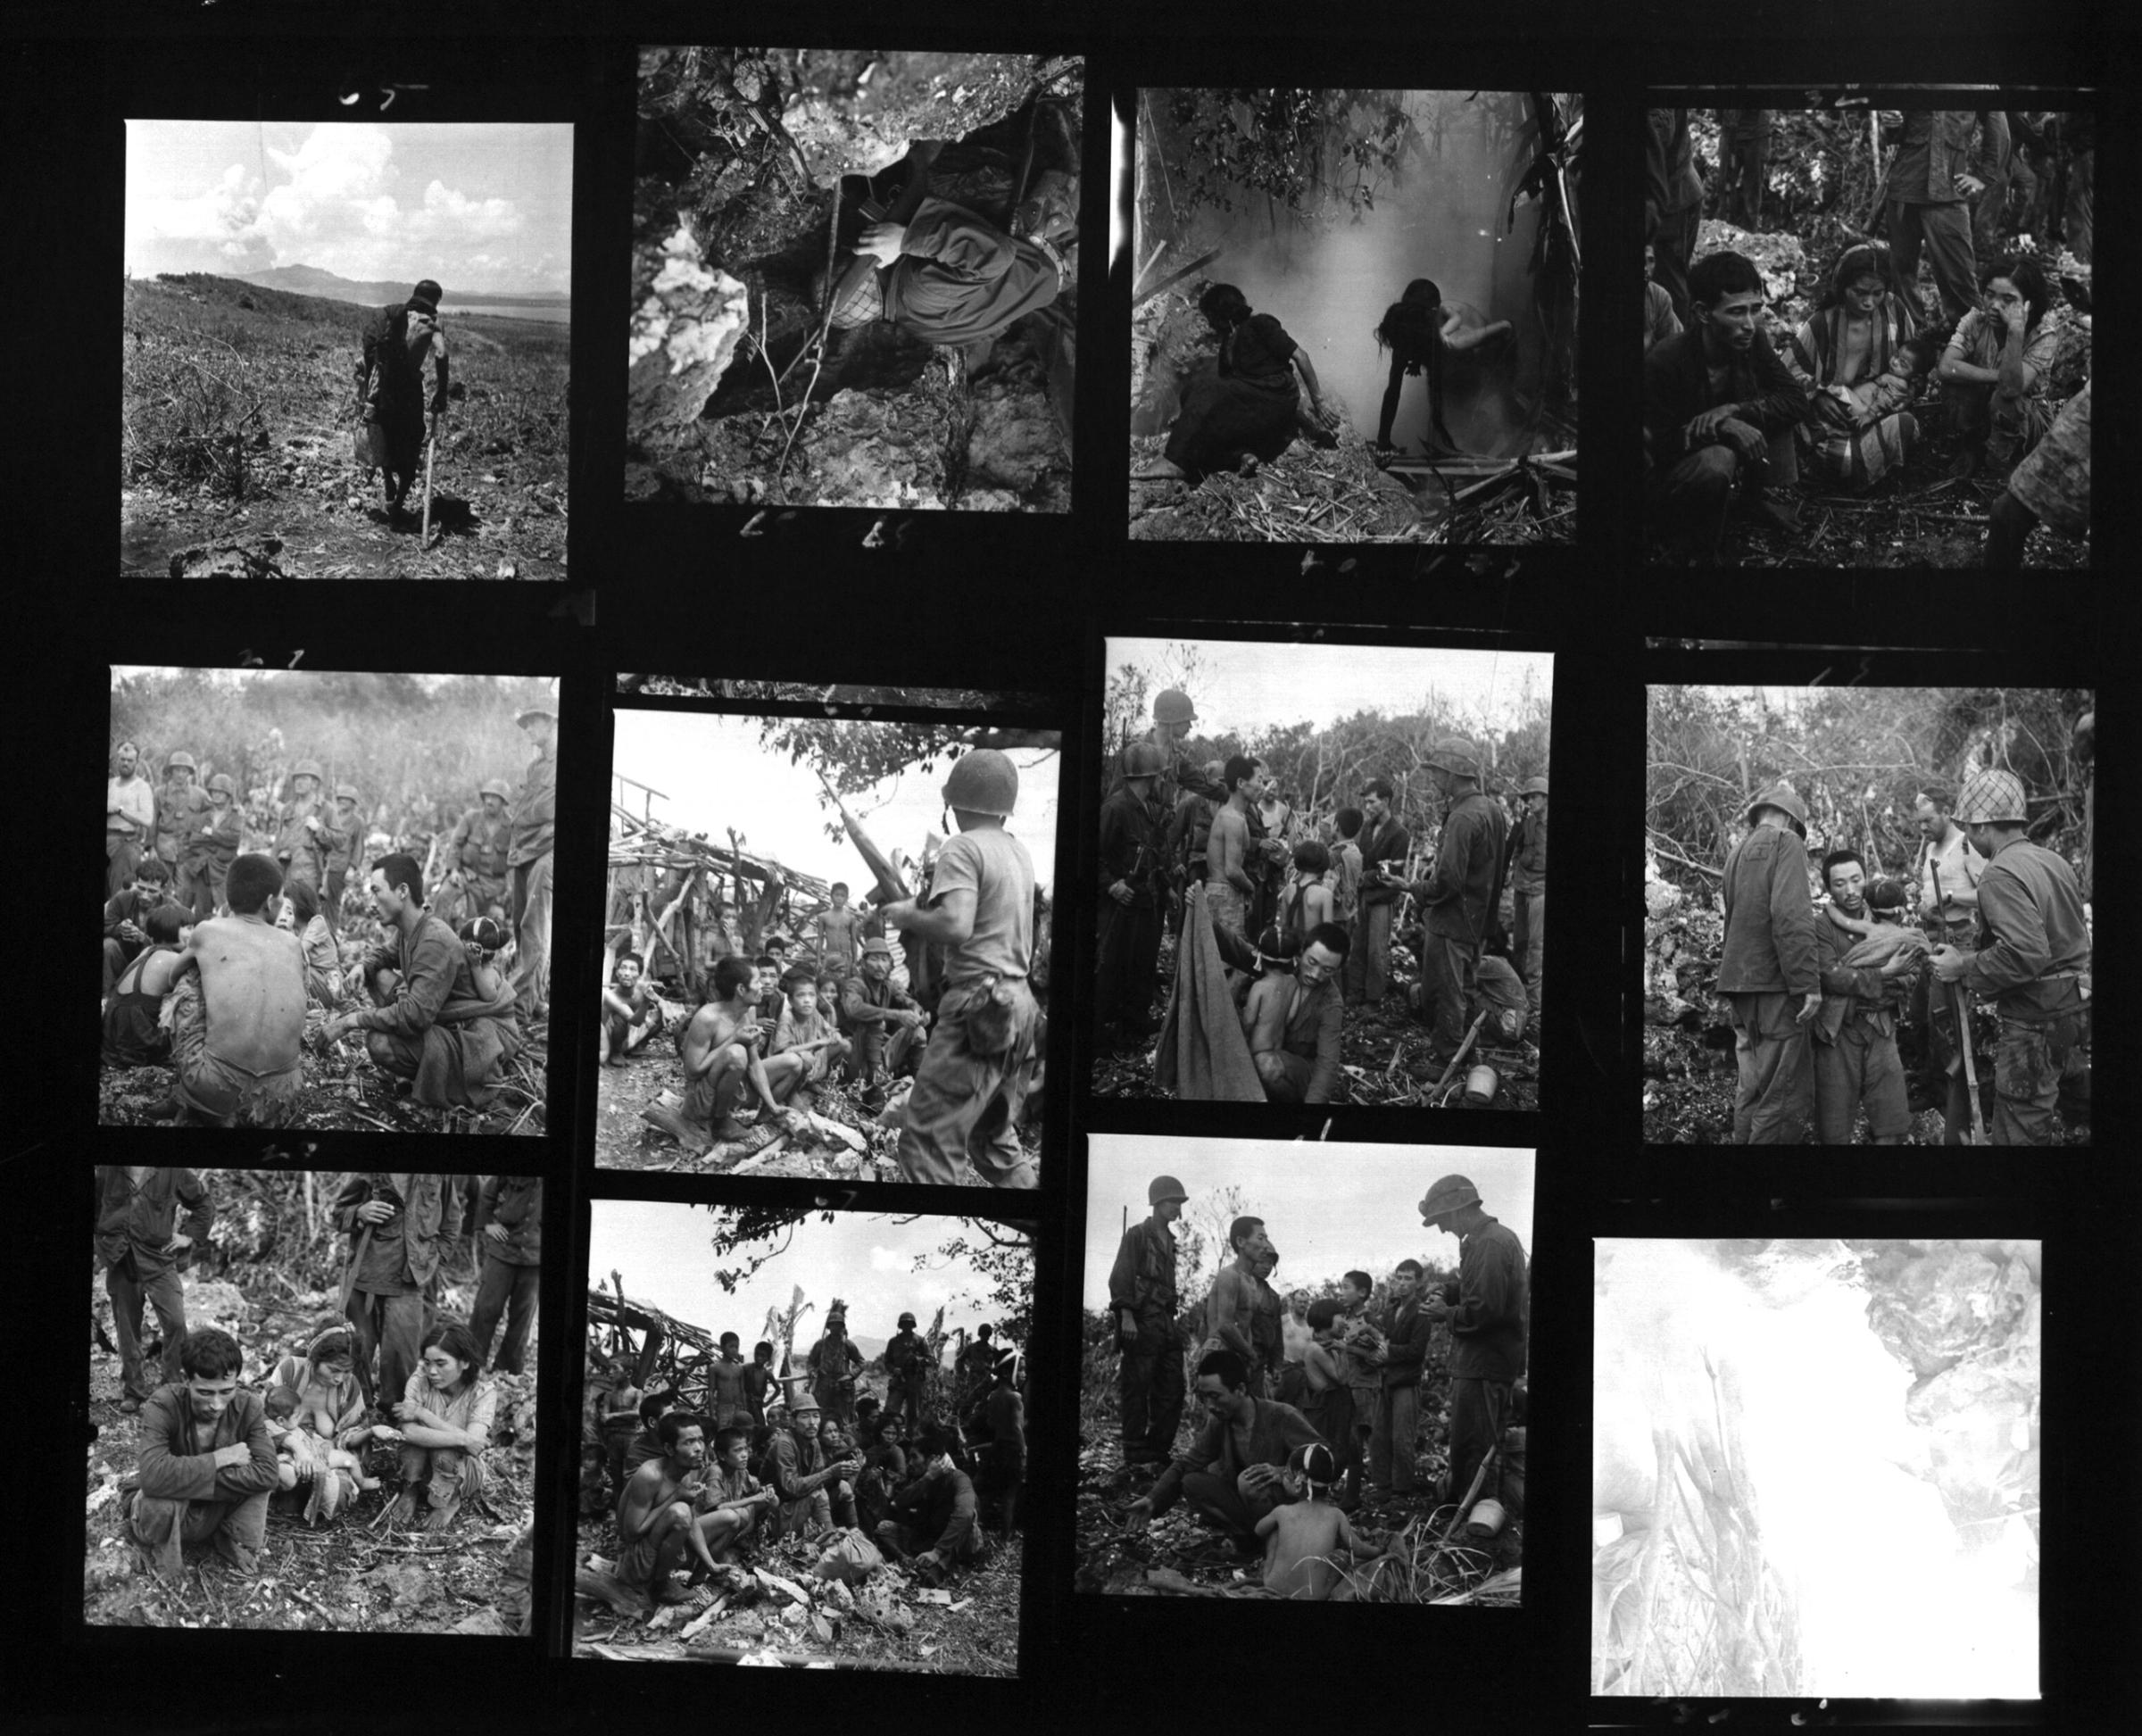 World War II Battle of Saipan photographed by W. Eugene Smith 1944.